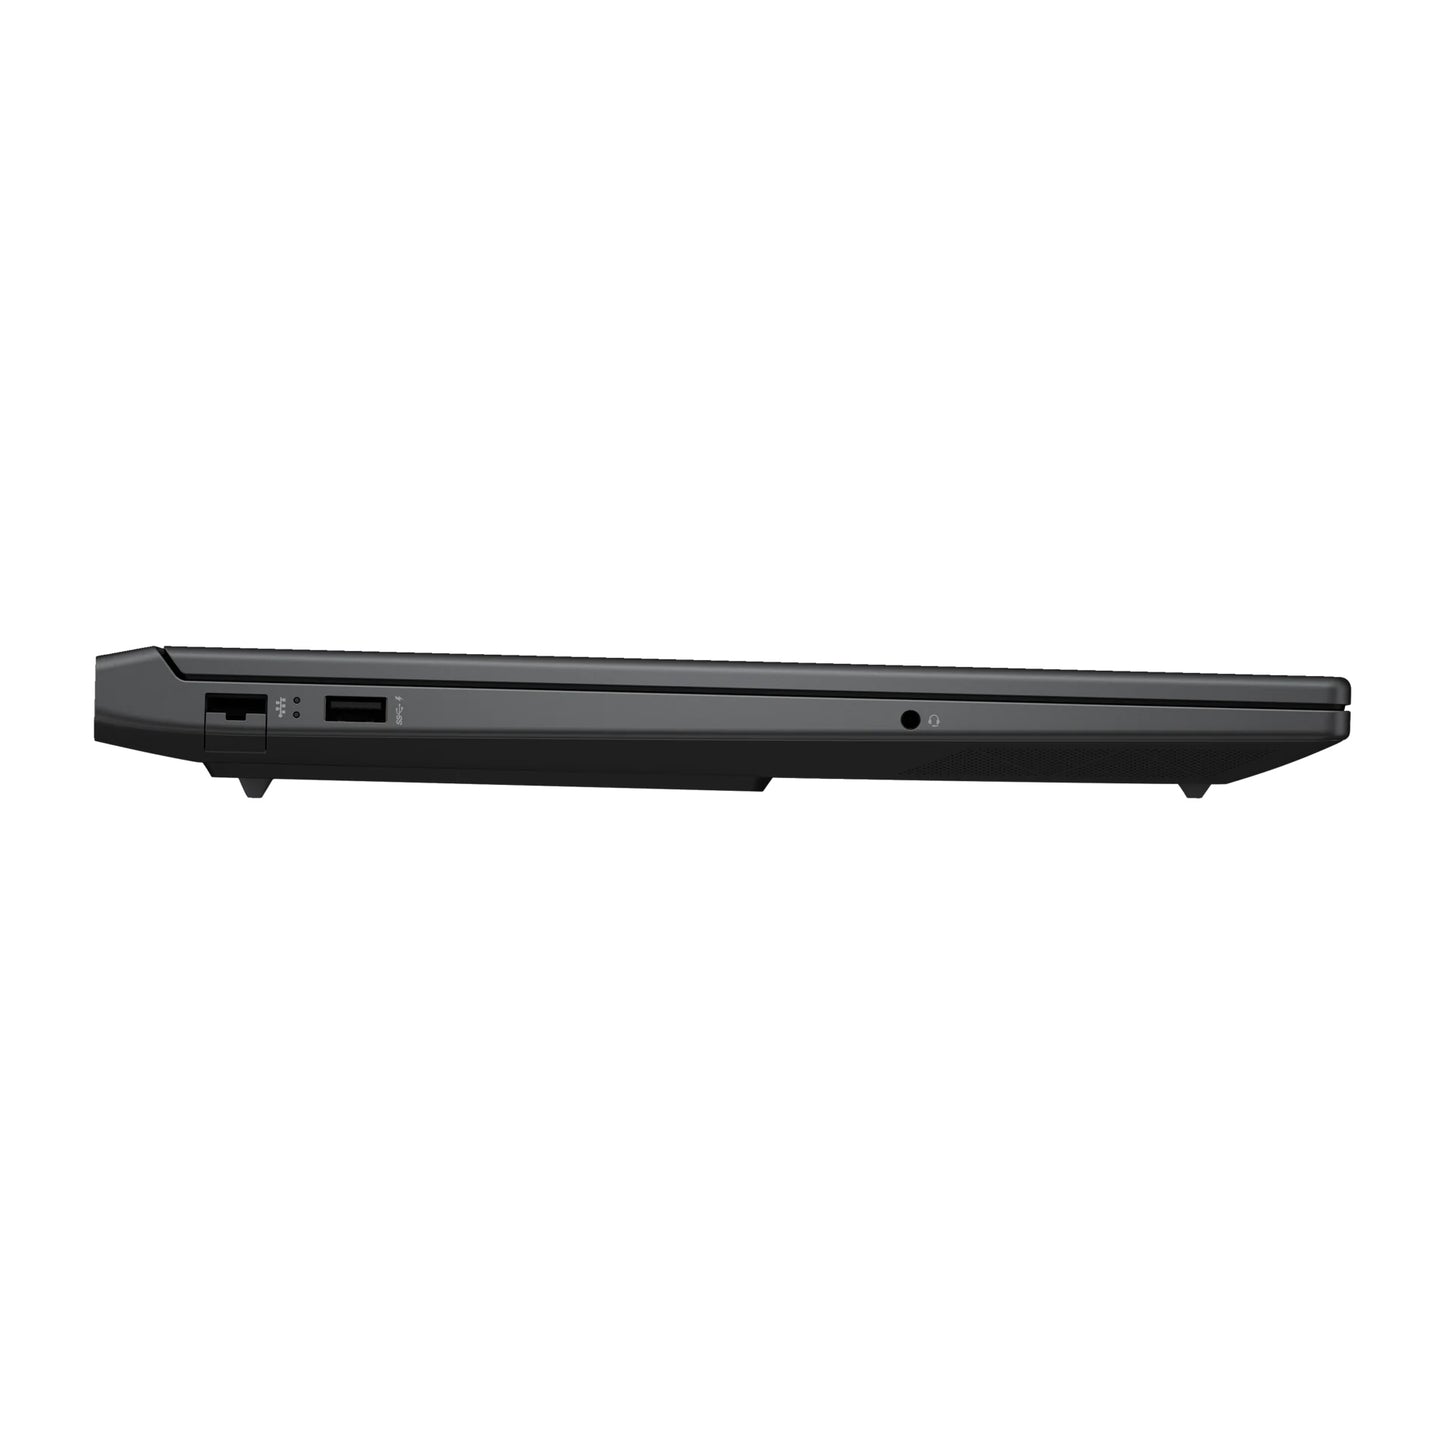 HP Victus 16T-R000 76S93AV Core i7-13700h Rtx 4070 144Hz Gaming Laptop Offers (Brand New)